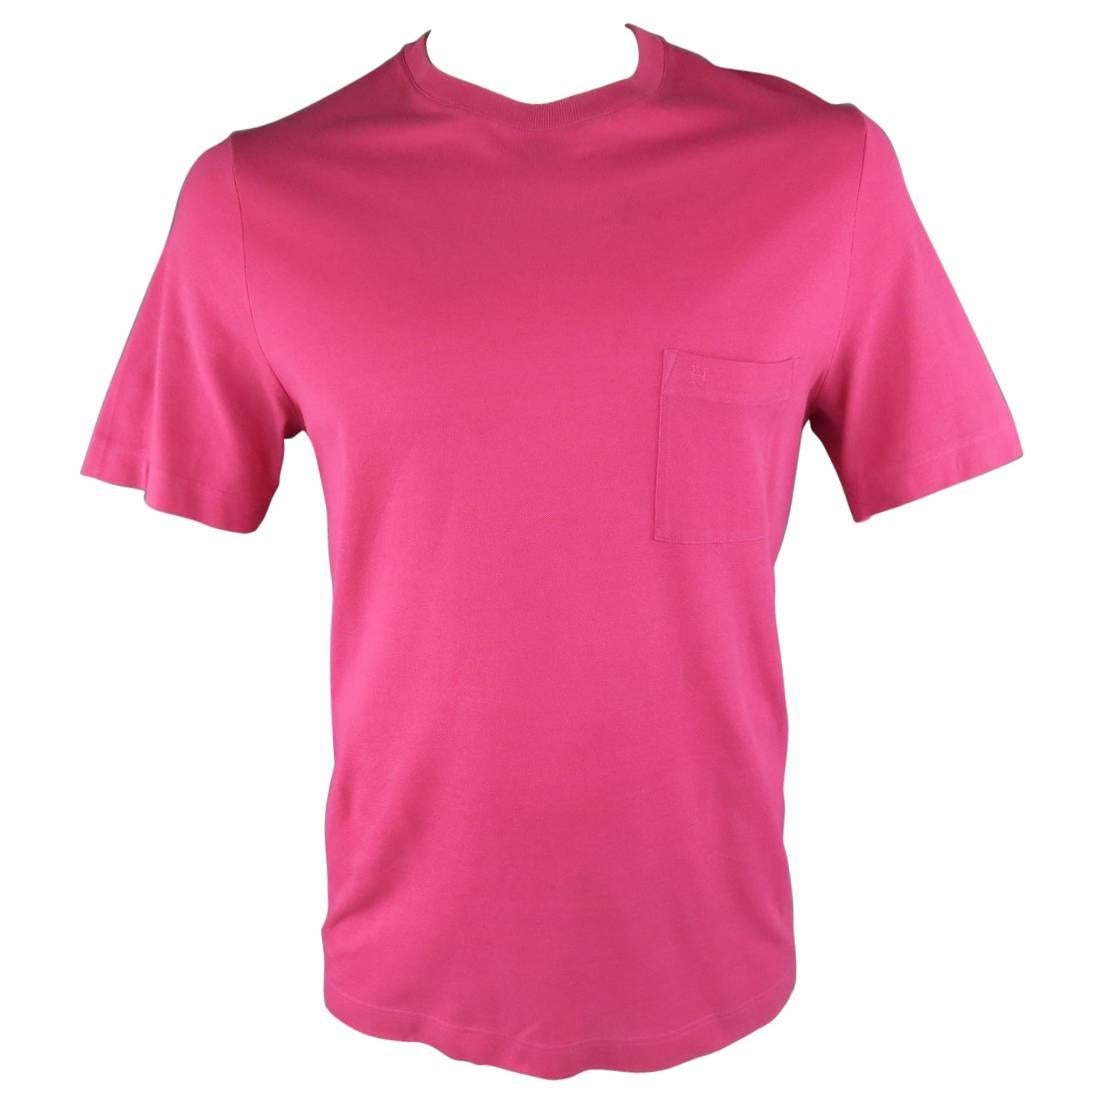 HERMES Size XL Pink Pique Ebroidered Emblem Ras du Cou Pocket T-shirt